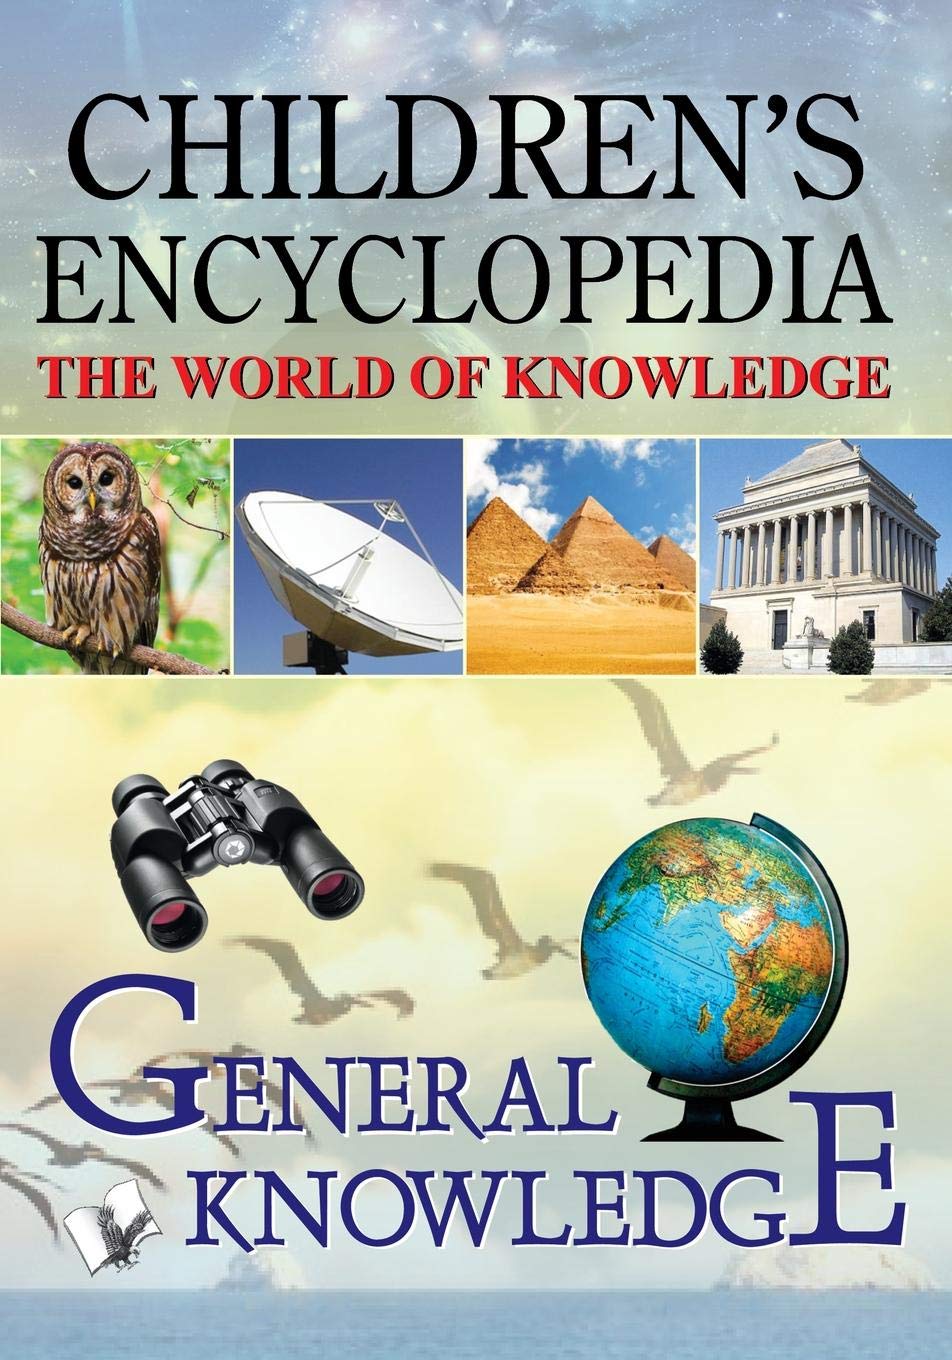 Encyclopedia of general knowledge by jahangir success series pdf